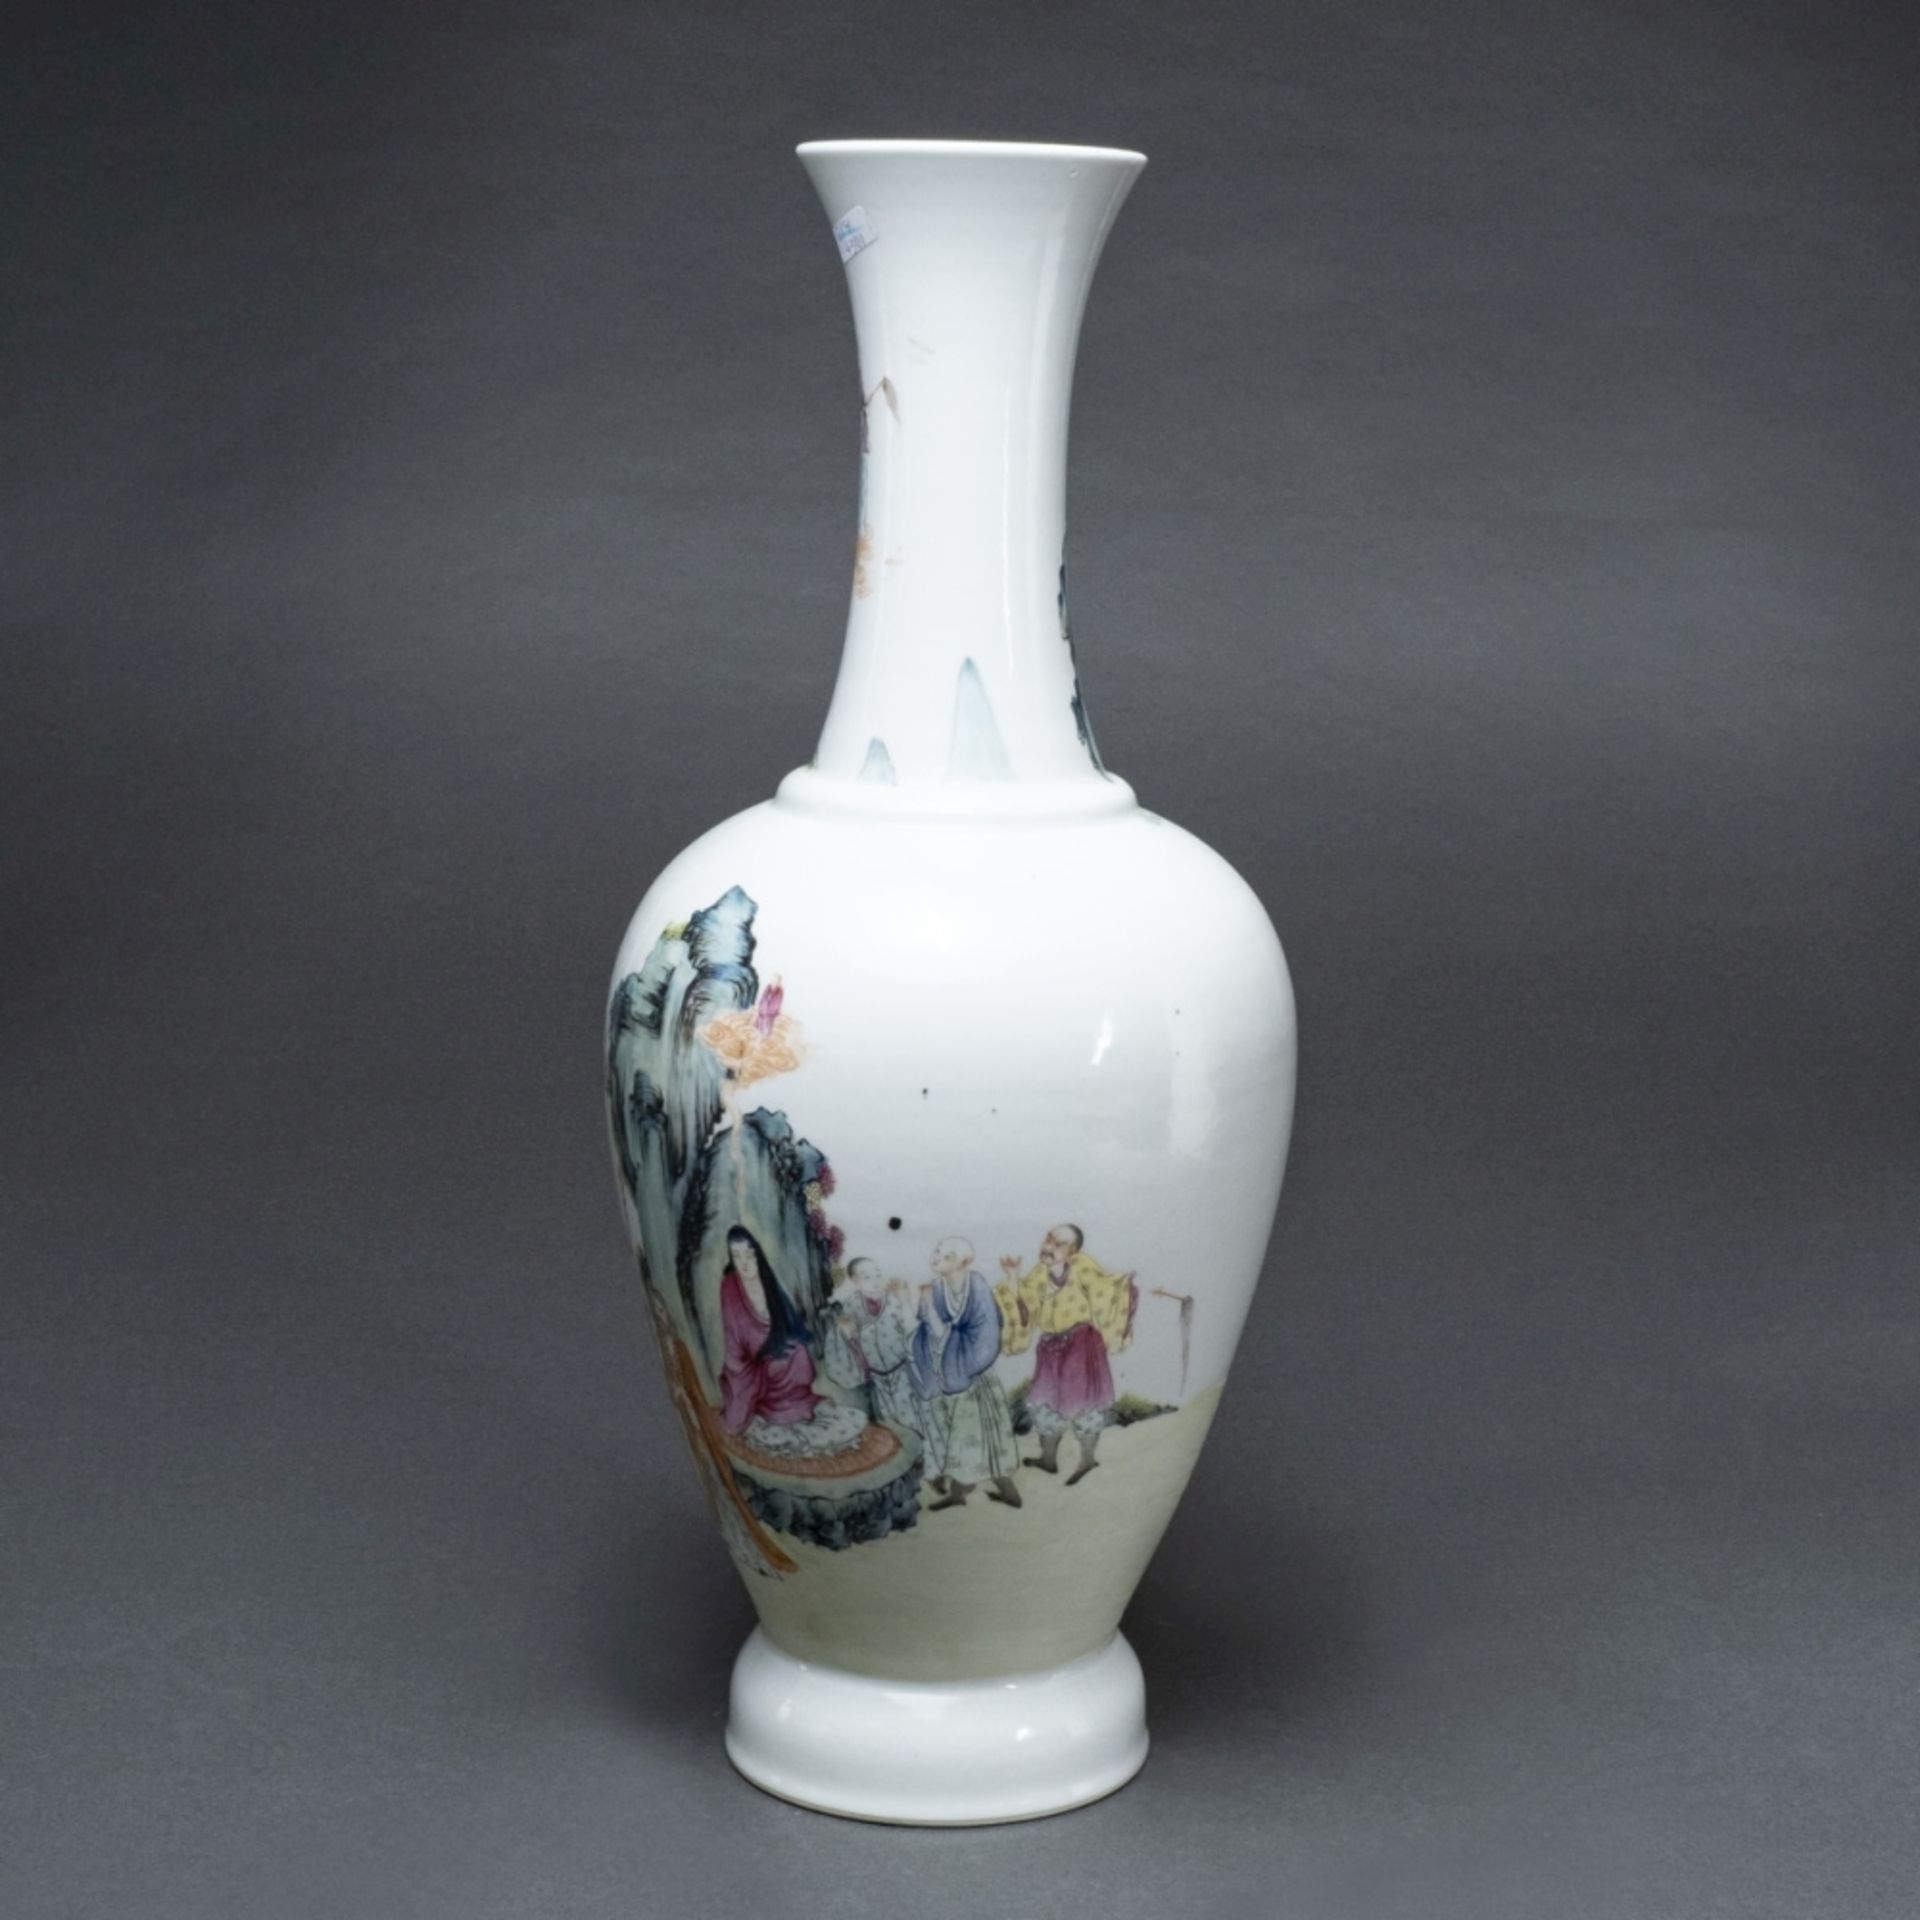 Famille rose-Vase, China, Qing-Dynastie, Ende 19. Jahrhundert - Image 2 of 3